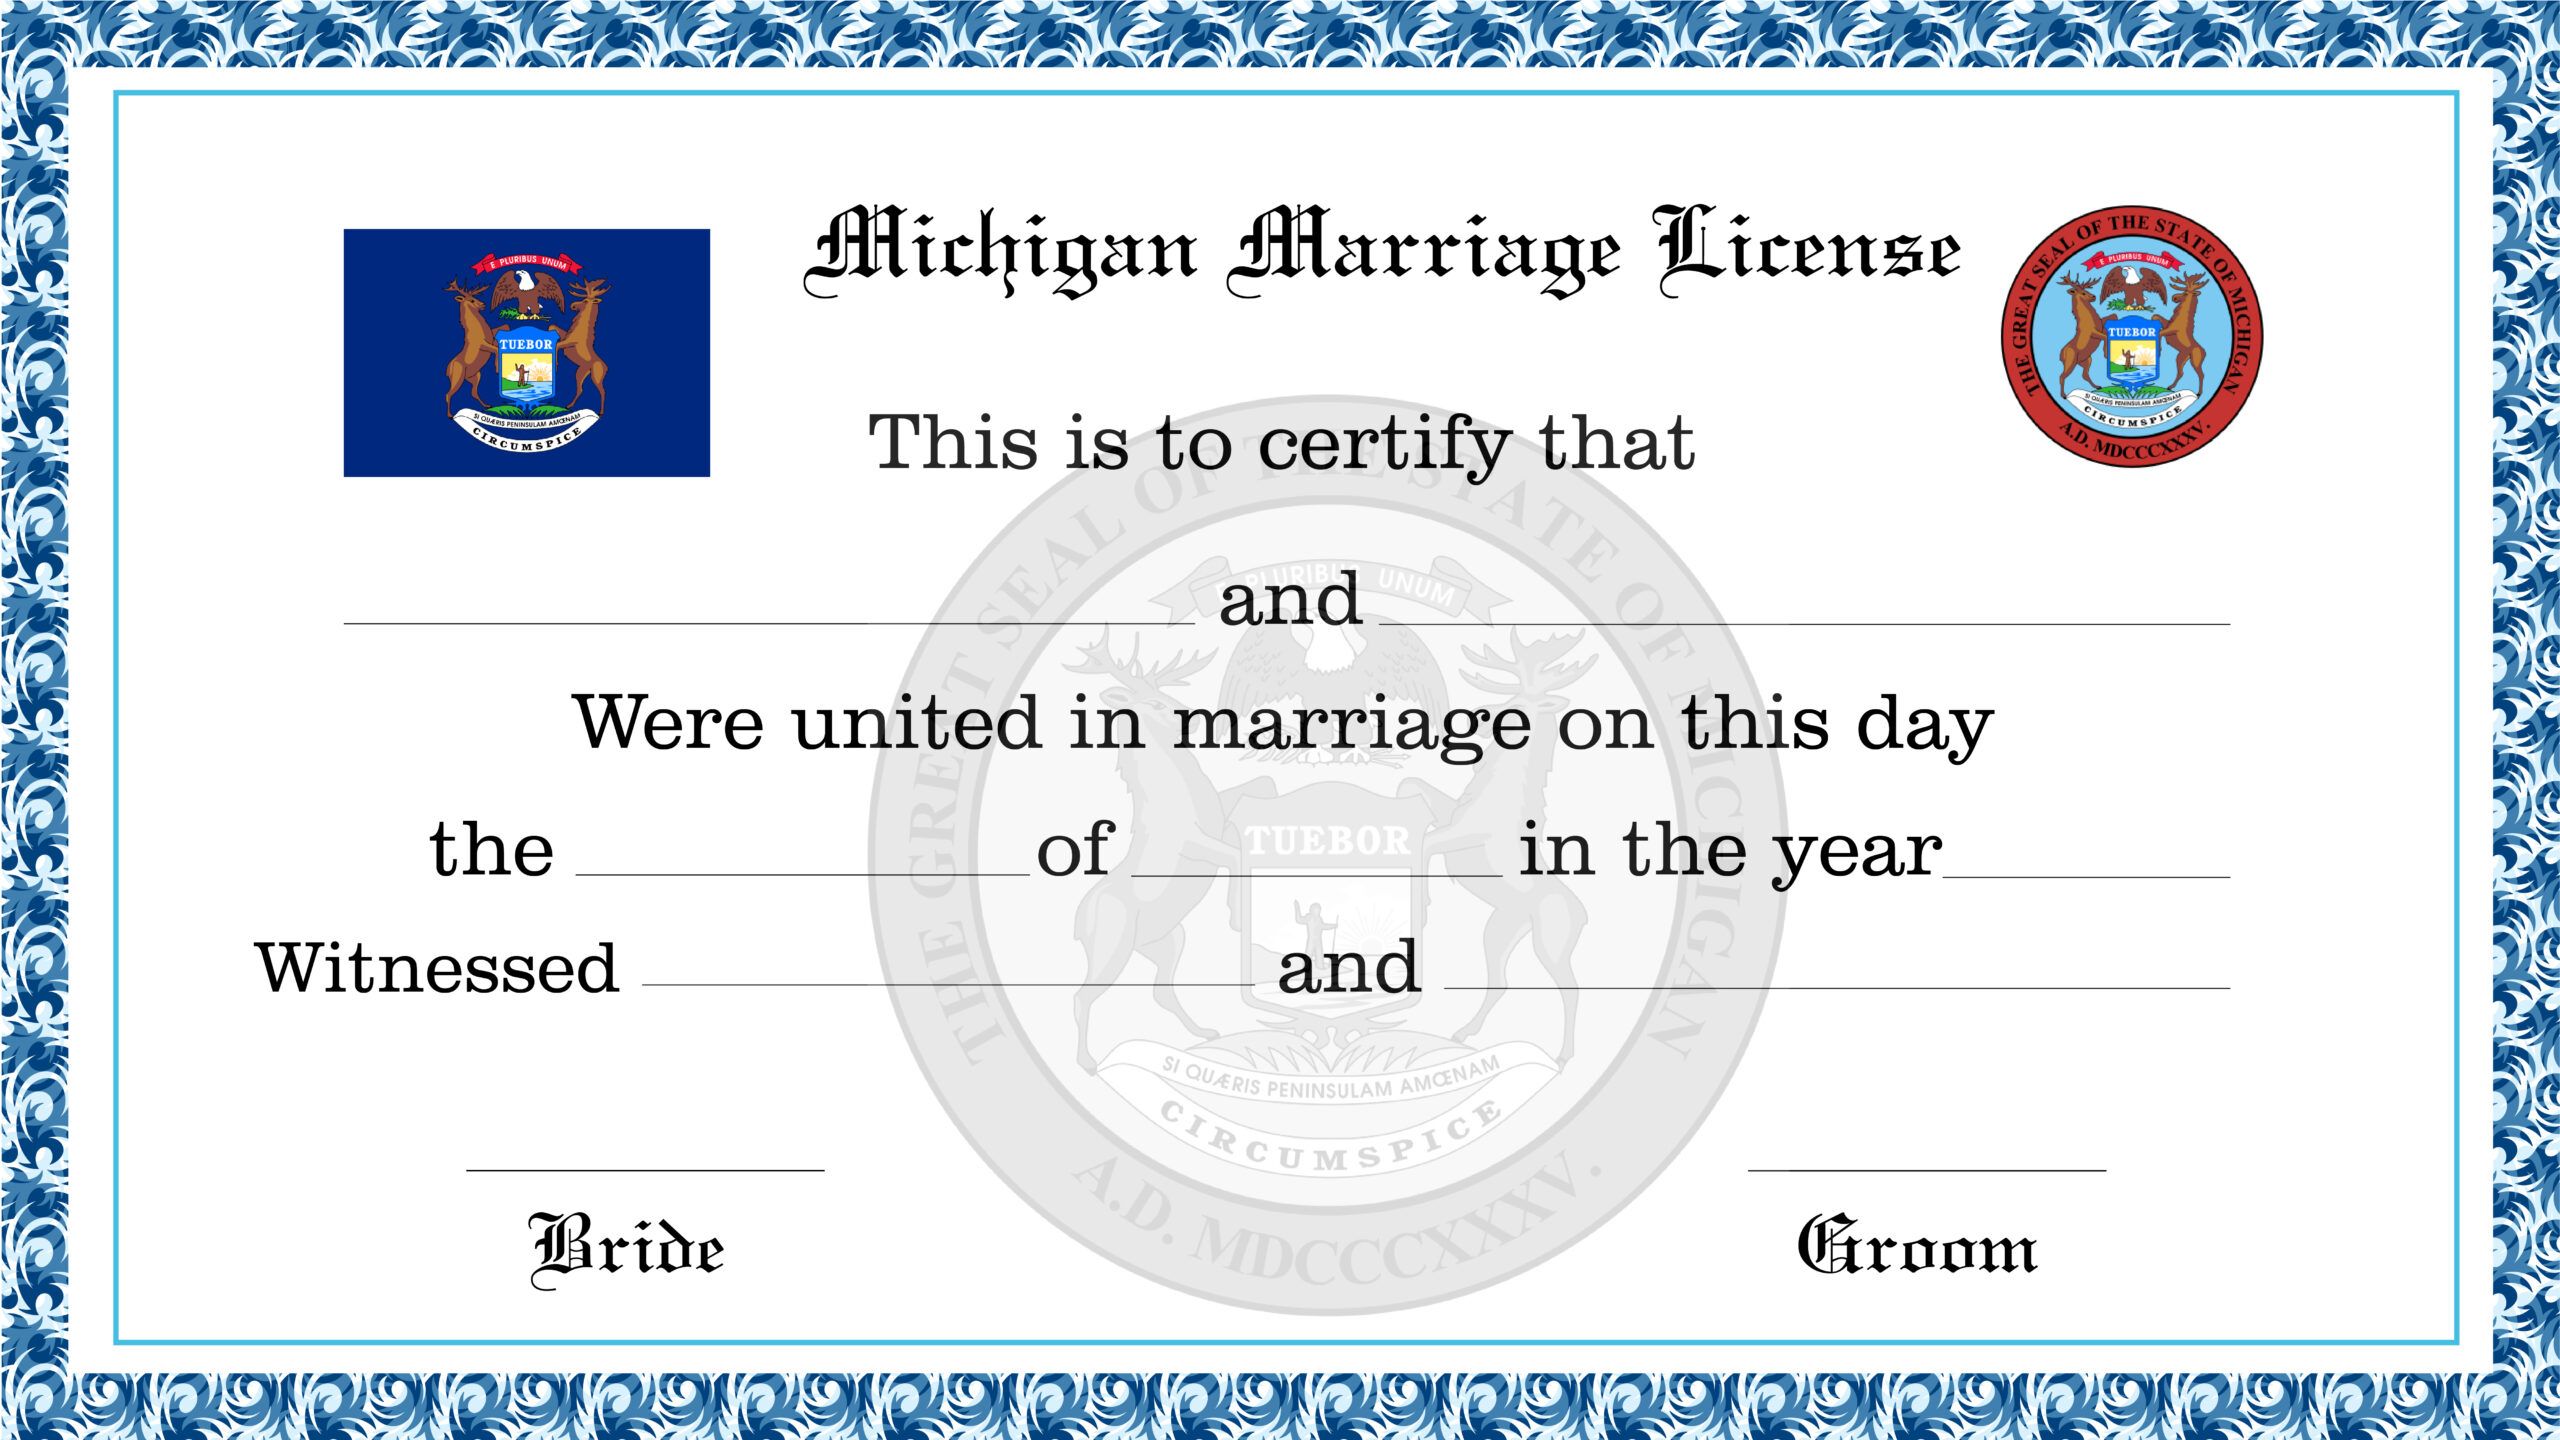 Michigan Marriage License License Lookup